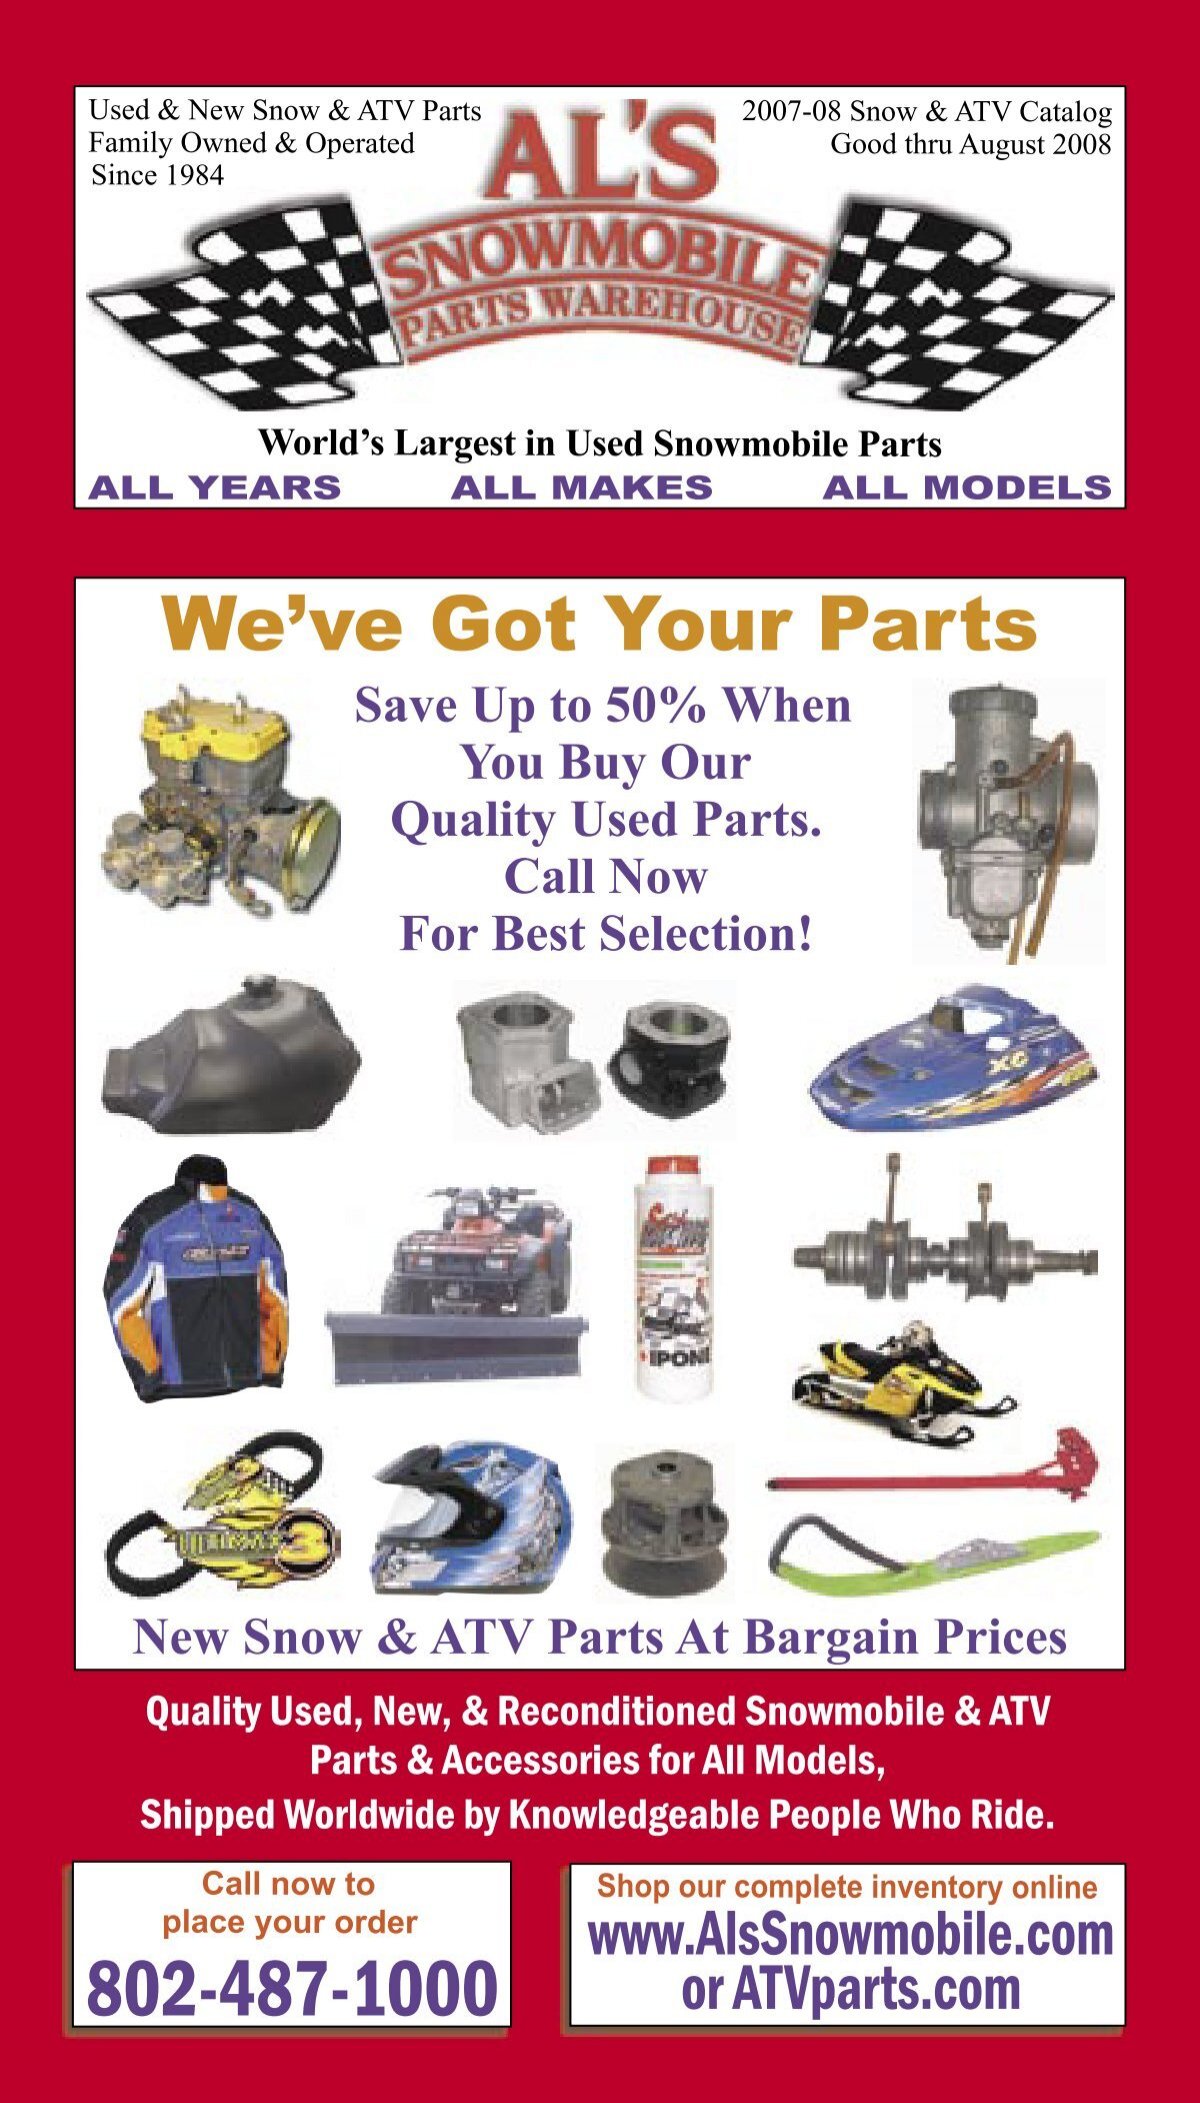 snow0708 catalog.indd - Al's Snowmobile Parts Warehouse